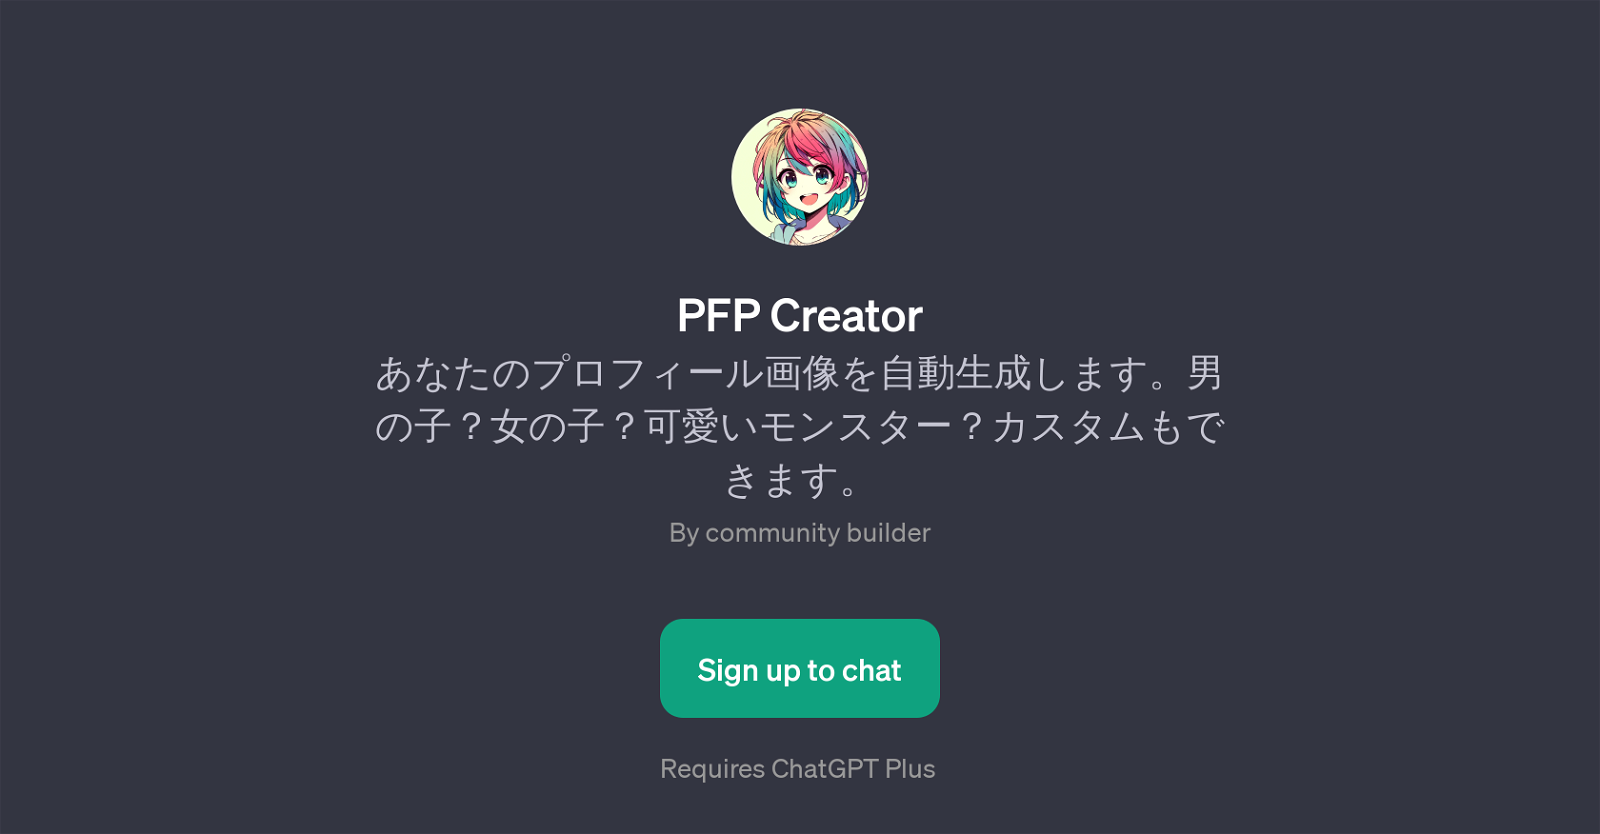 PFP Creator website